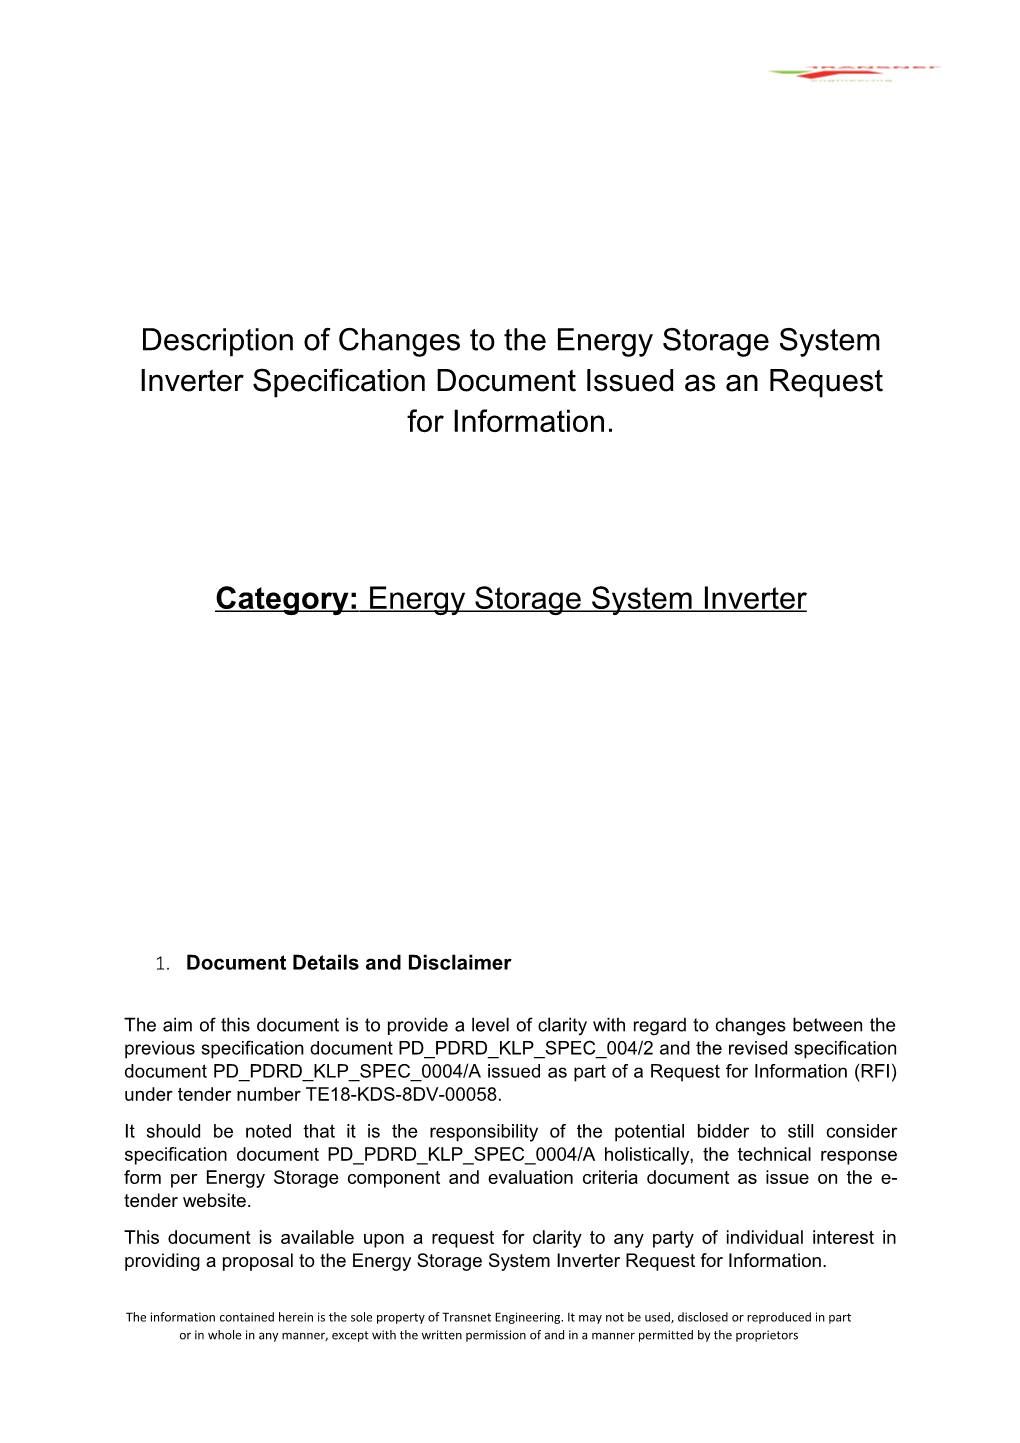 Category:Energy Storage System Inverter